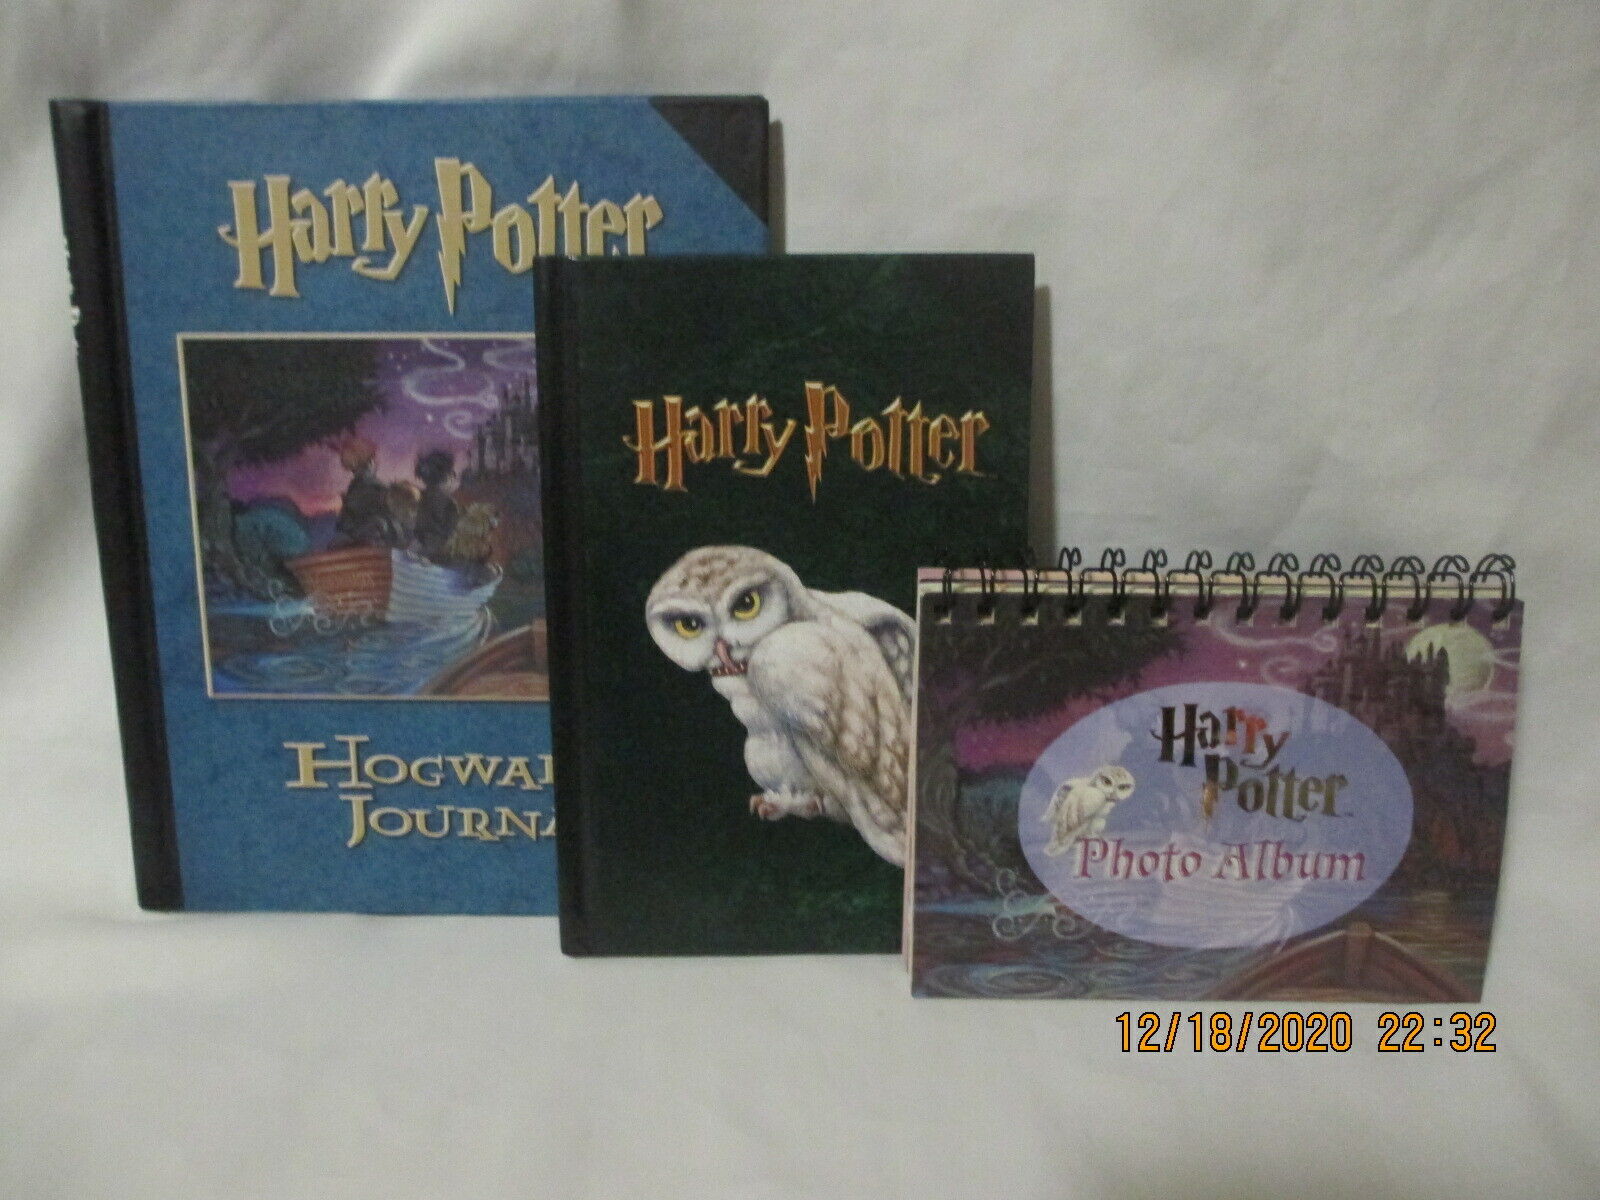 Harry Potter Photo Album Blank book Hogwarts Journal 2000 lot of 3 Warner Bros.